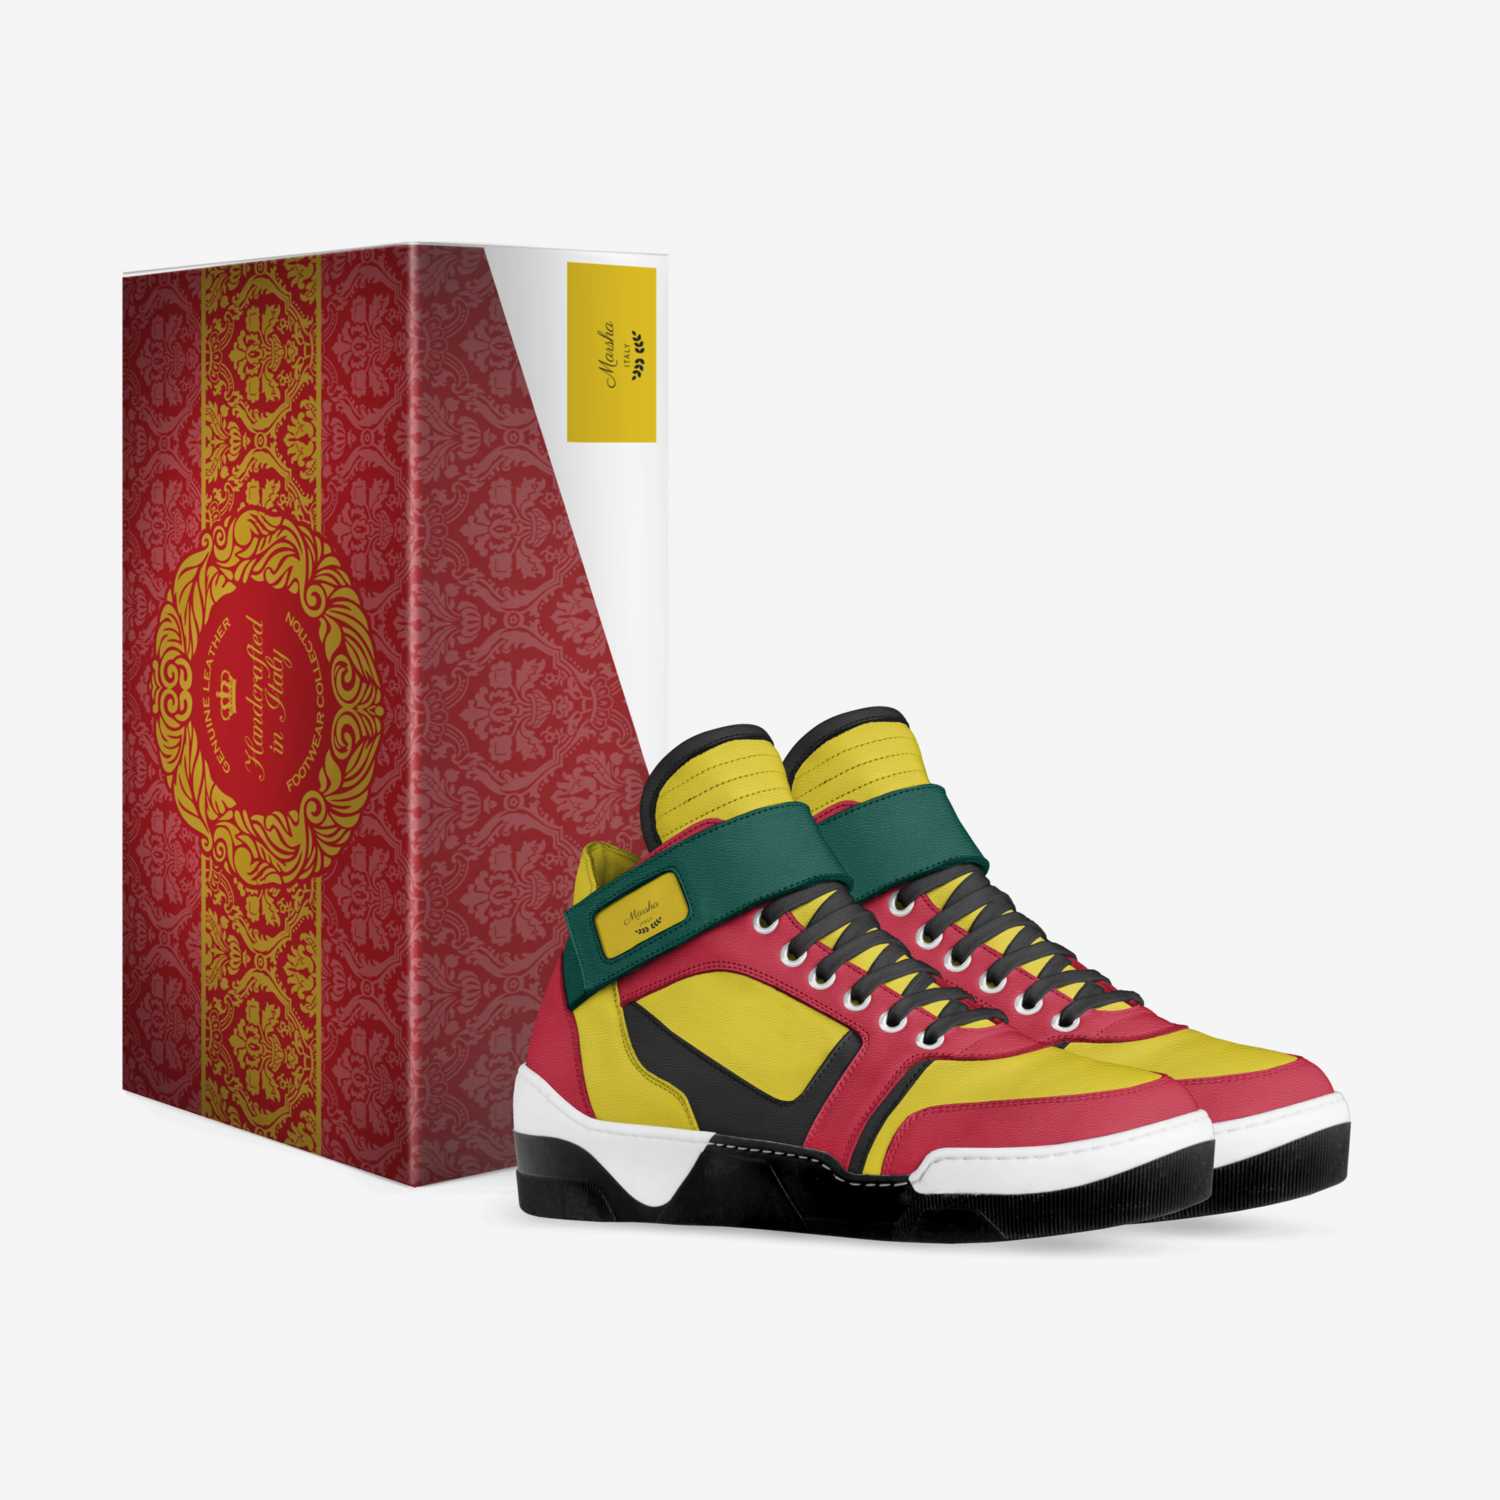 Marsha custom made in Italy shoes by Herbert Marshall Jr | Box view